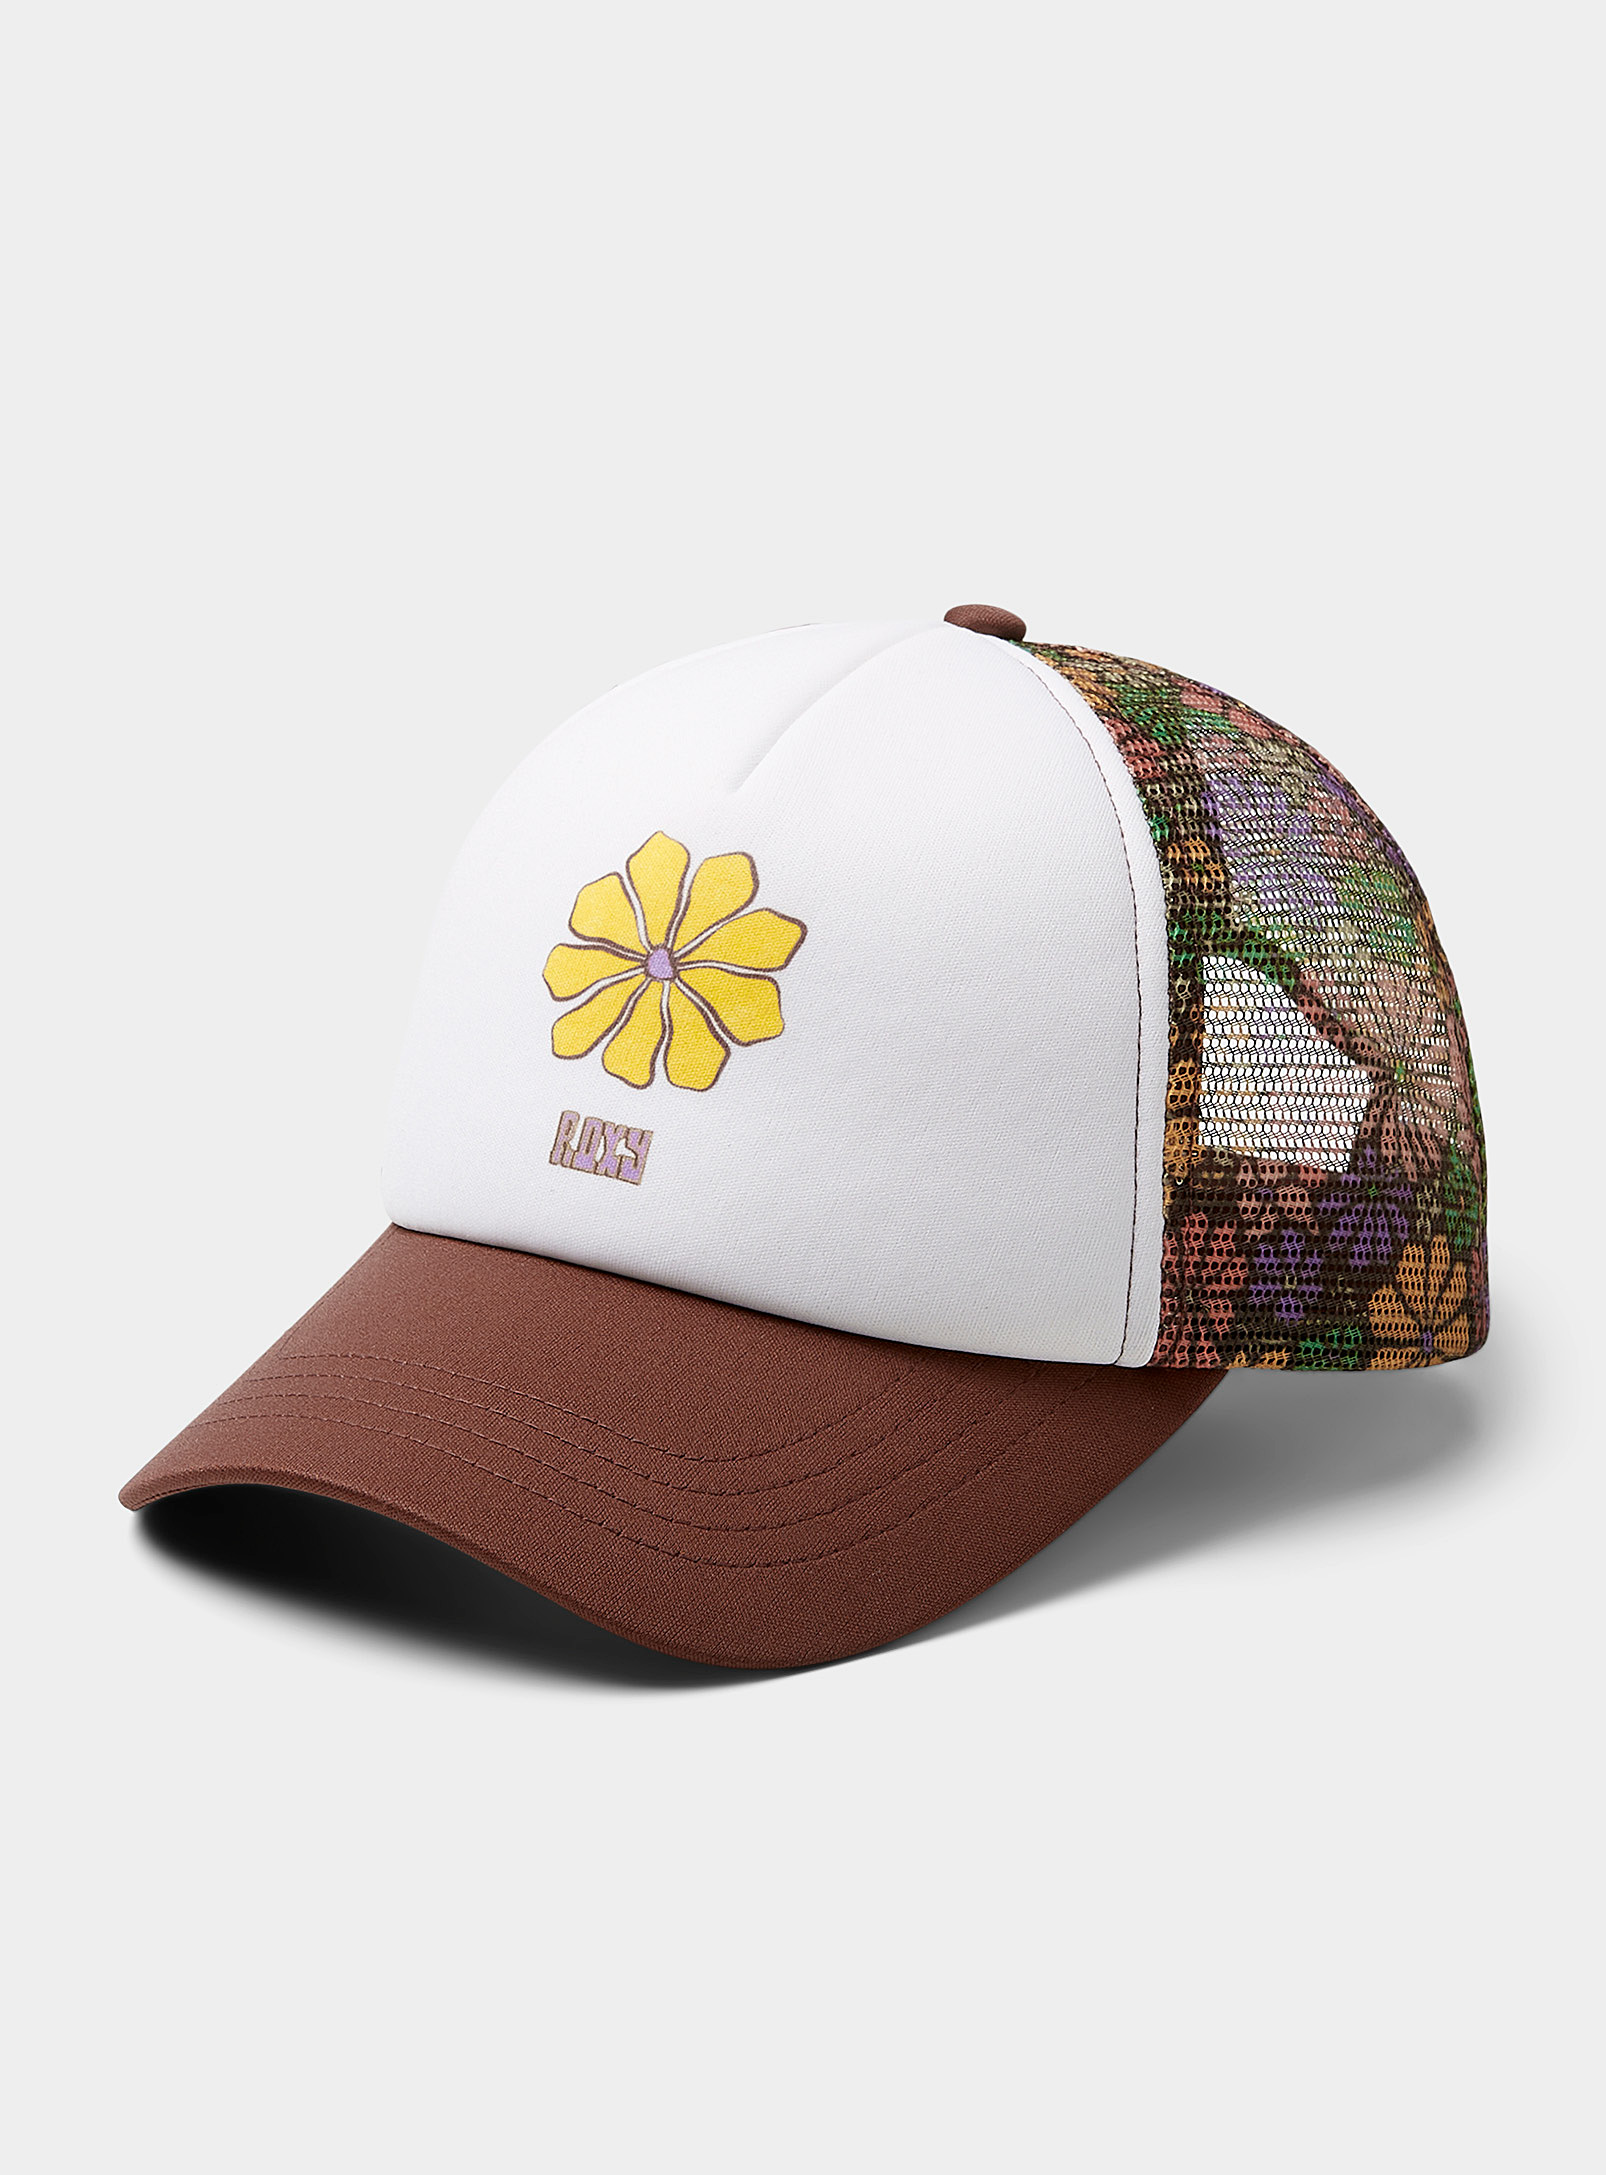 Roxy - Women's Colourful floral trucker cap